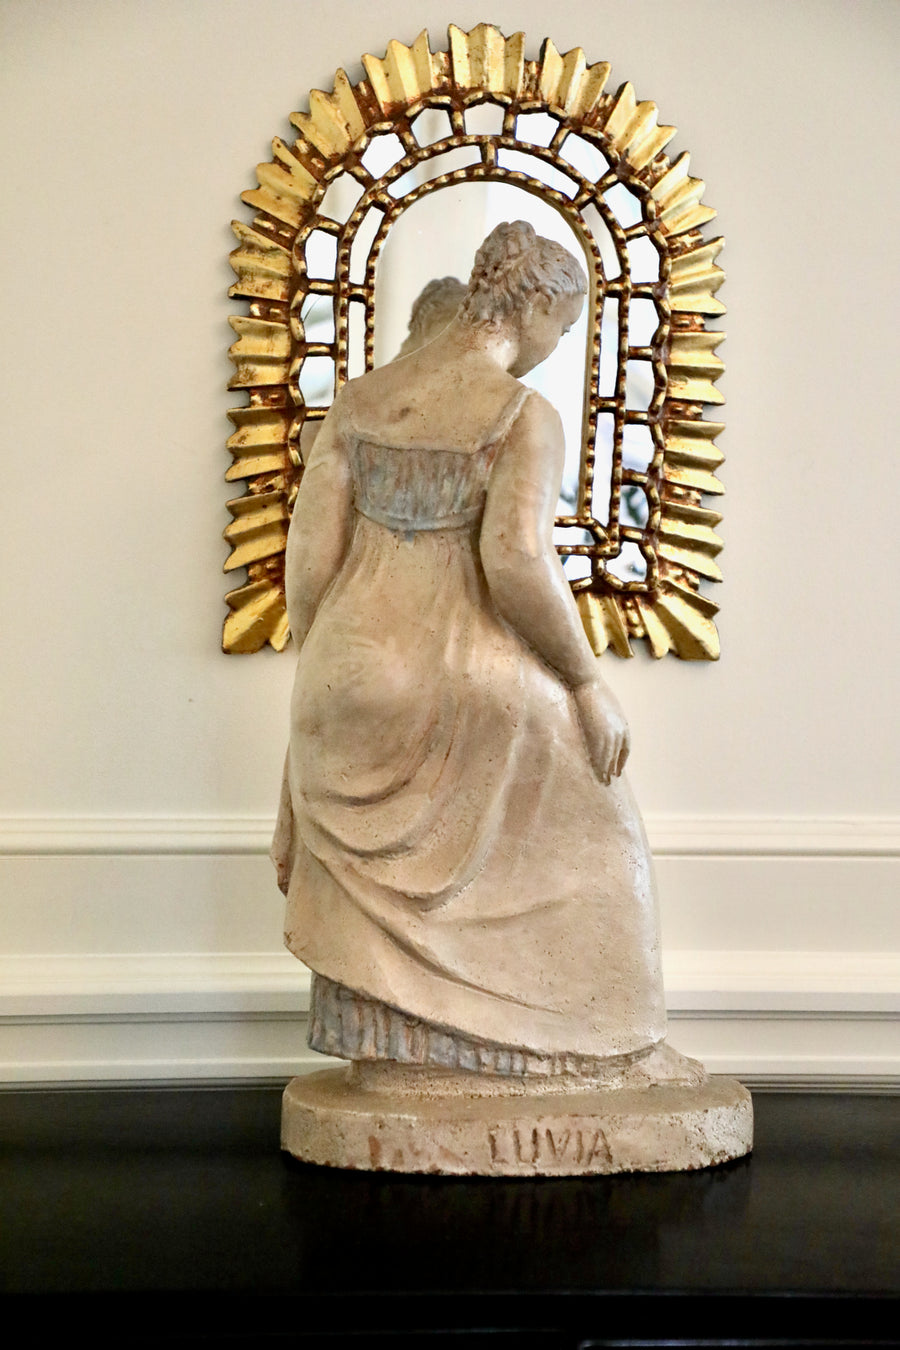 Clivia Calder Morrison, Glazed Terracotta Sculpture of a Woman (c. 1930s)